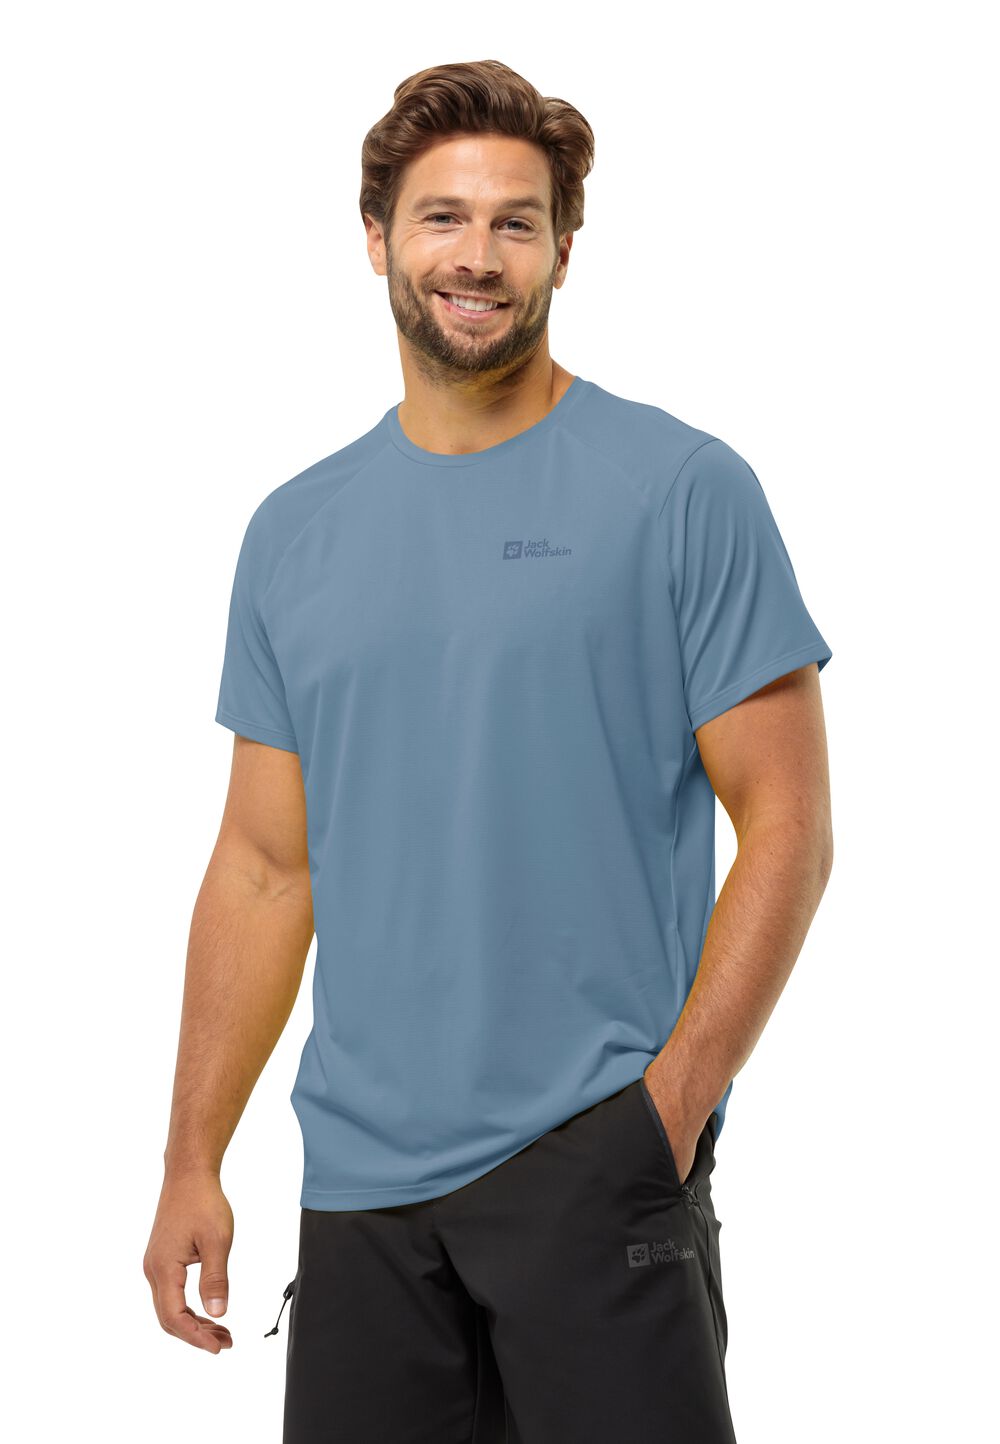 Jack Wolfskin Prelight Trail T-Shirt Men Functioneel shirt Heren S elemental blue elemental blue